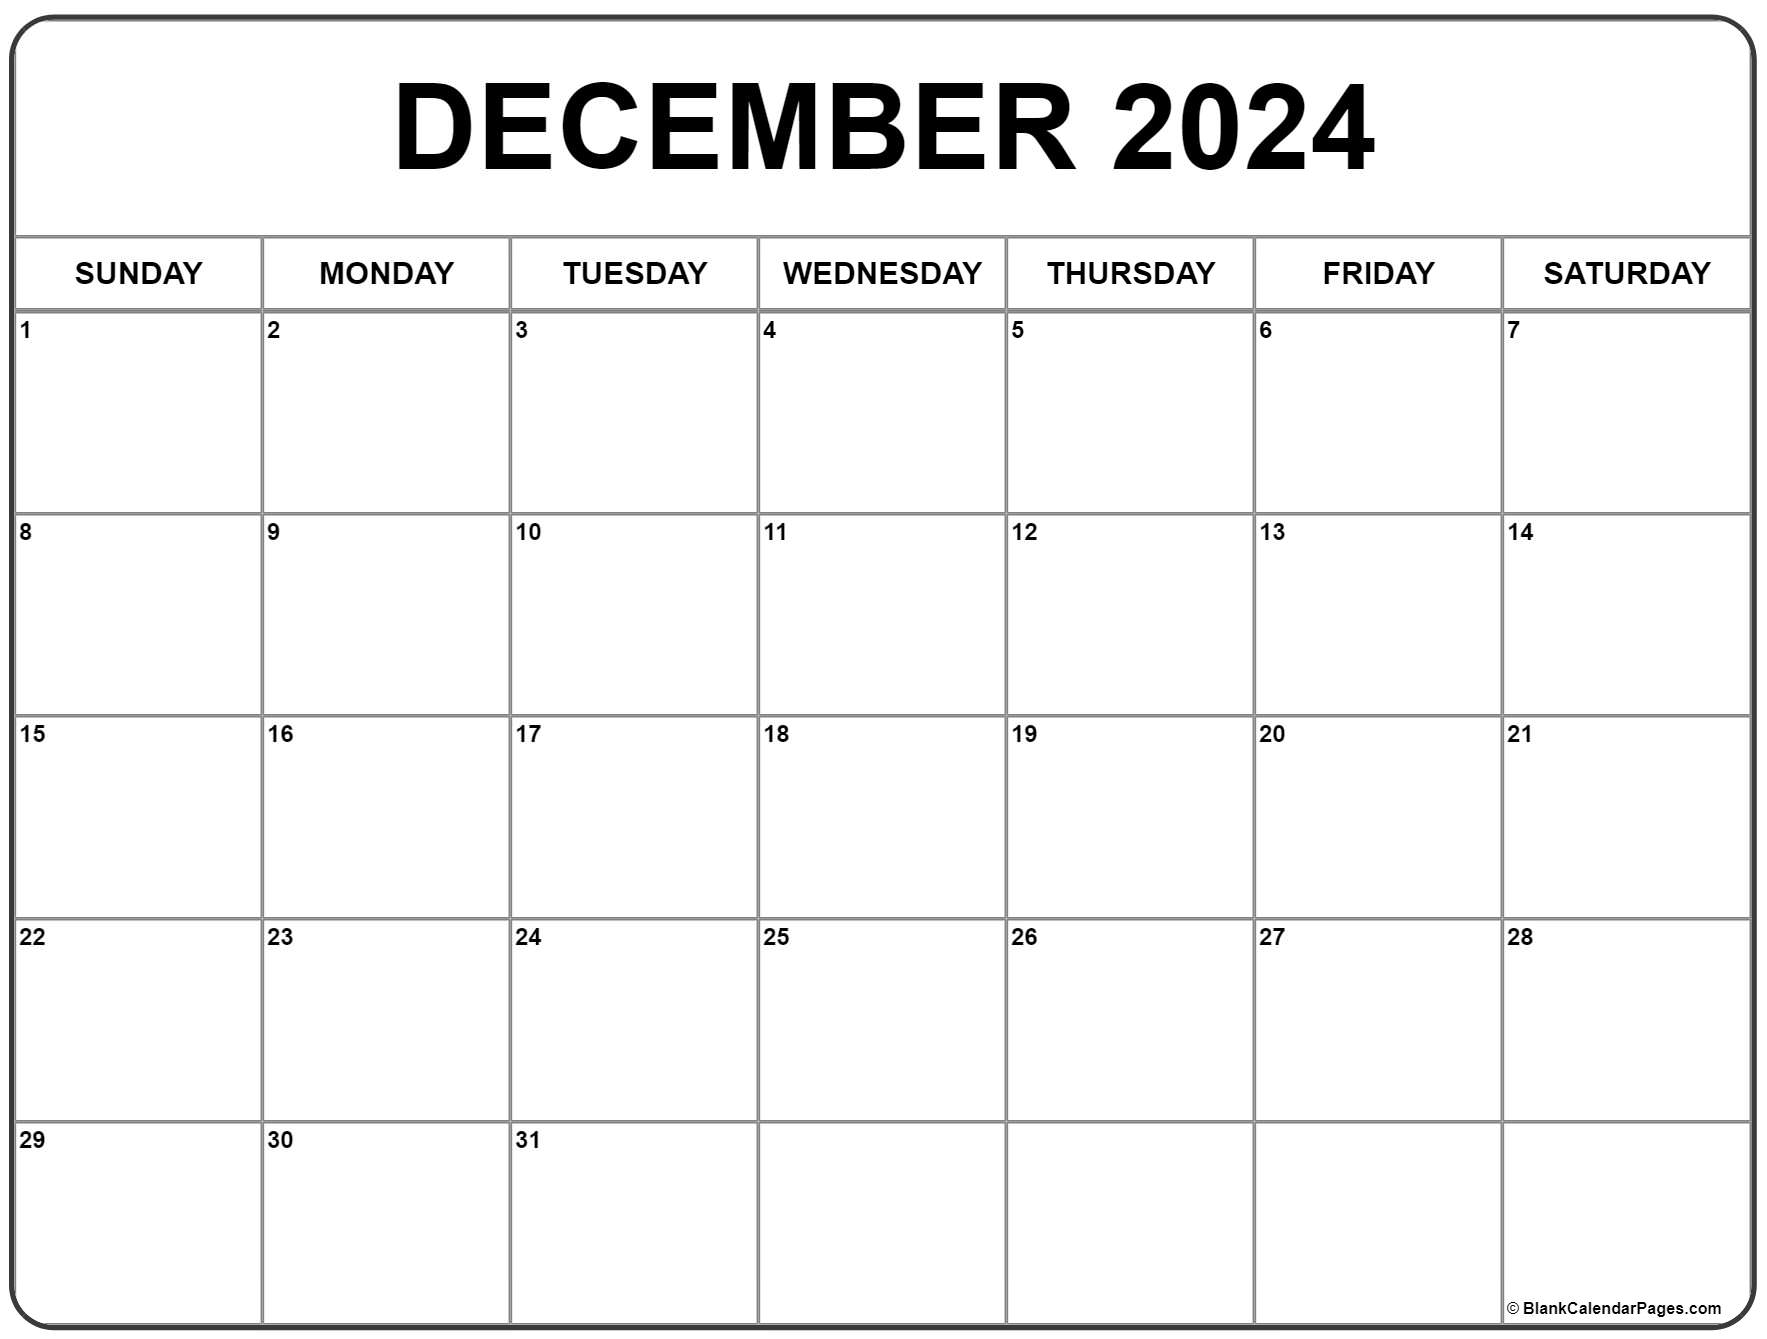 December 2022 Calendar Blank December 2022 Calendar | Free Printable Calendar Templates